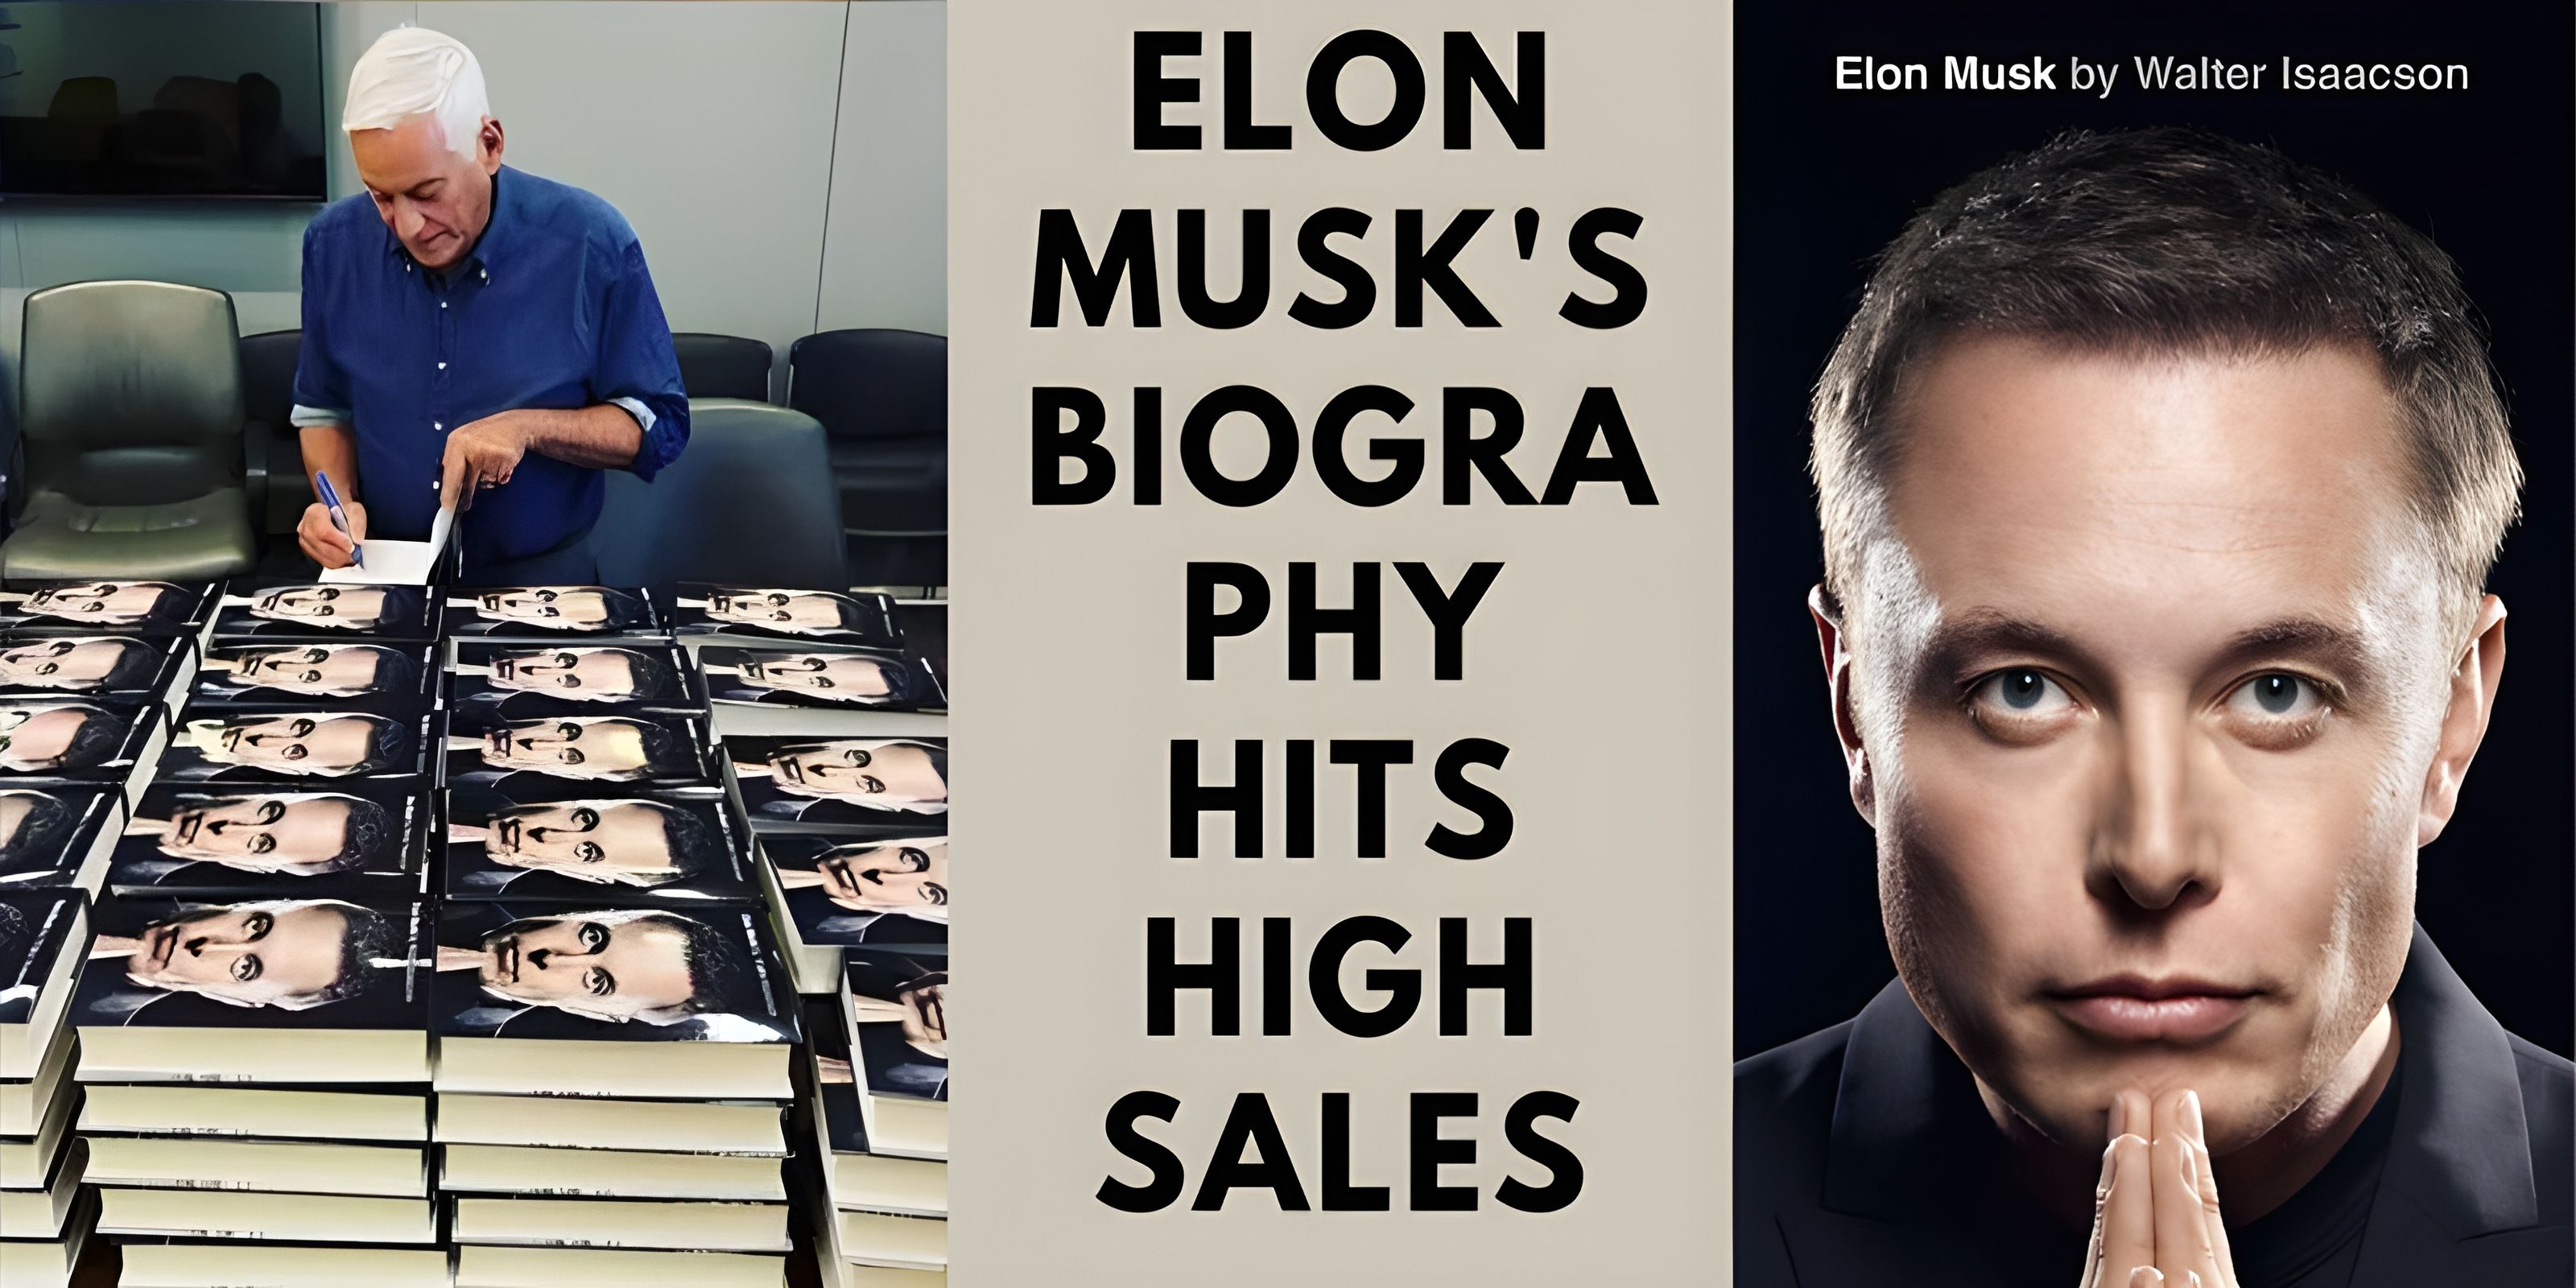 Elon Musk's Biography Hits High Sales, Billionaire Reacts